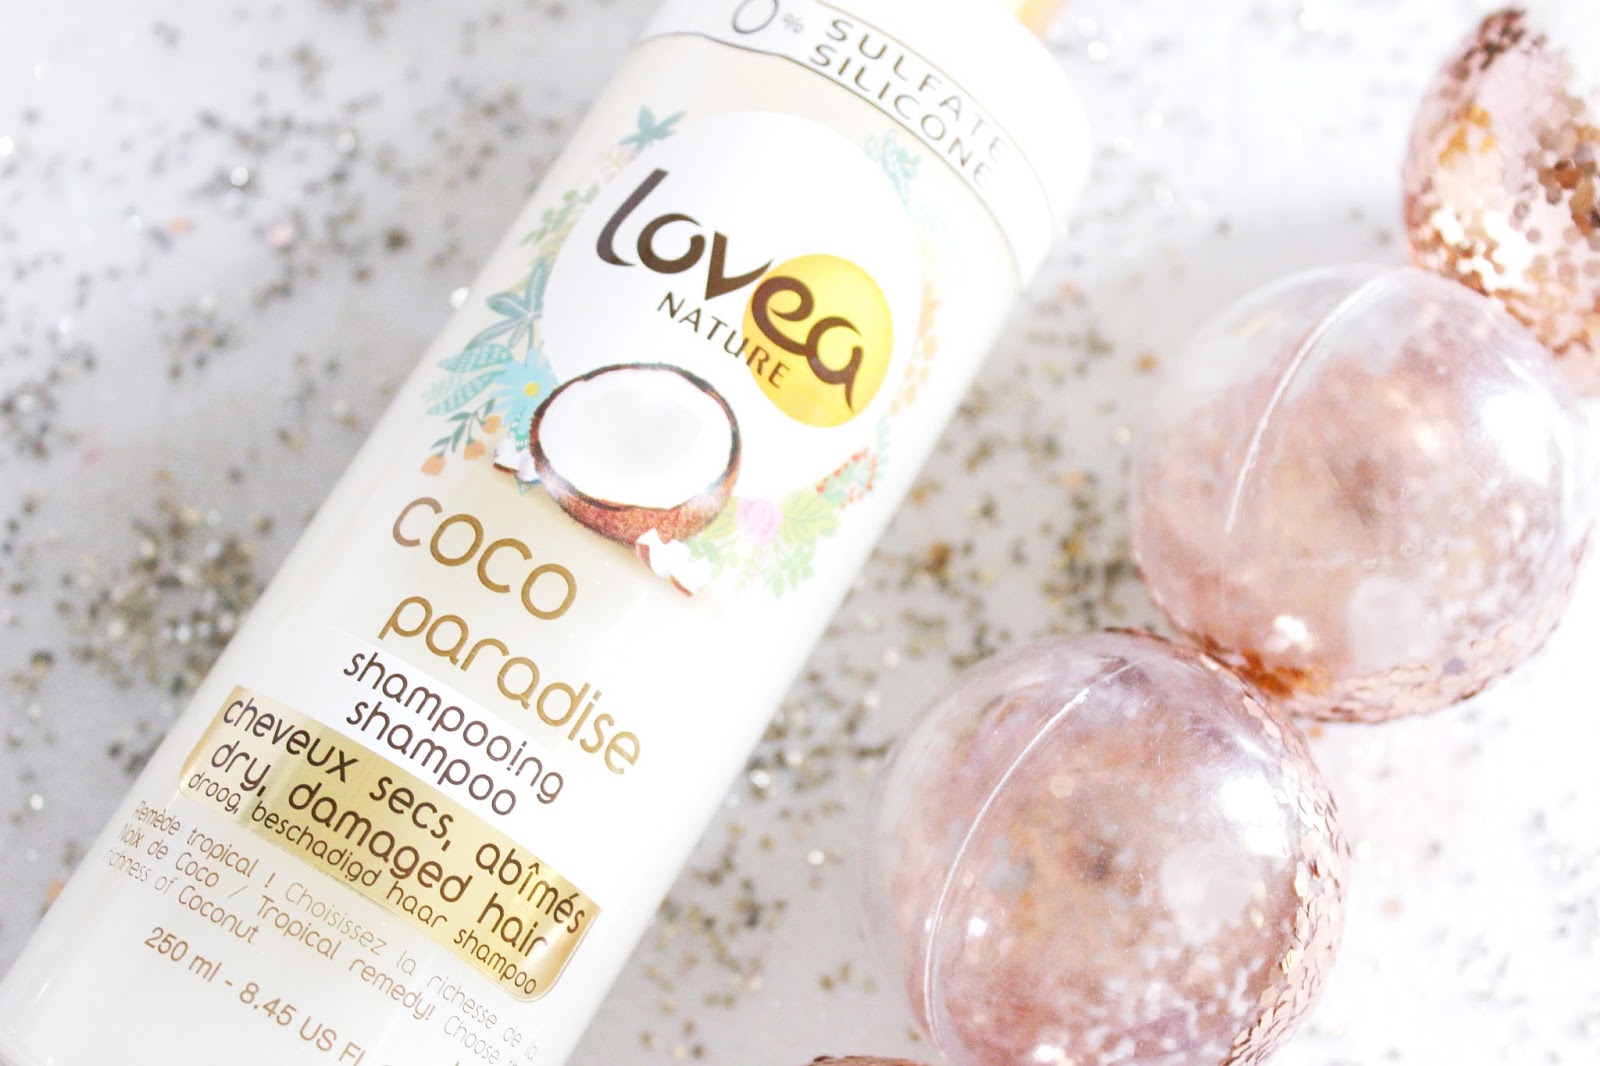 Lovea shampoing Coco & Cranberry